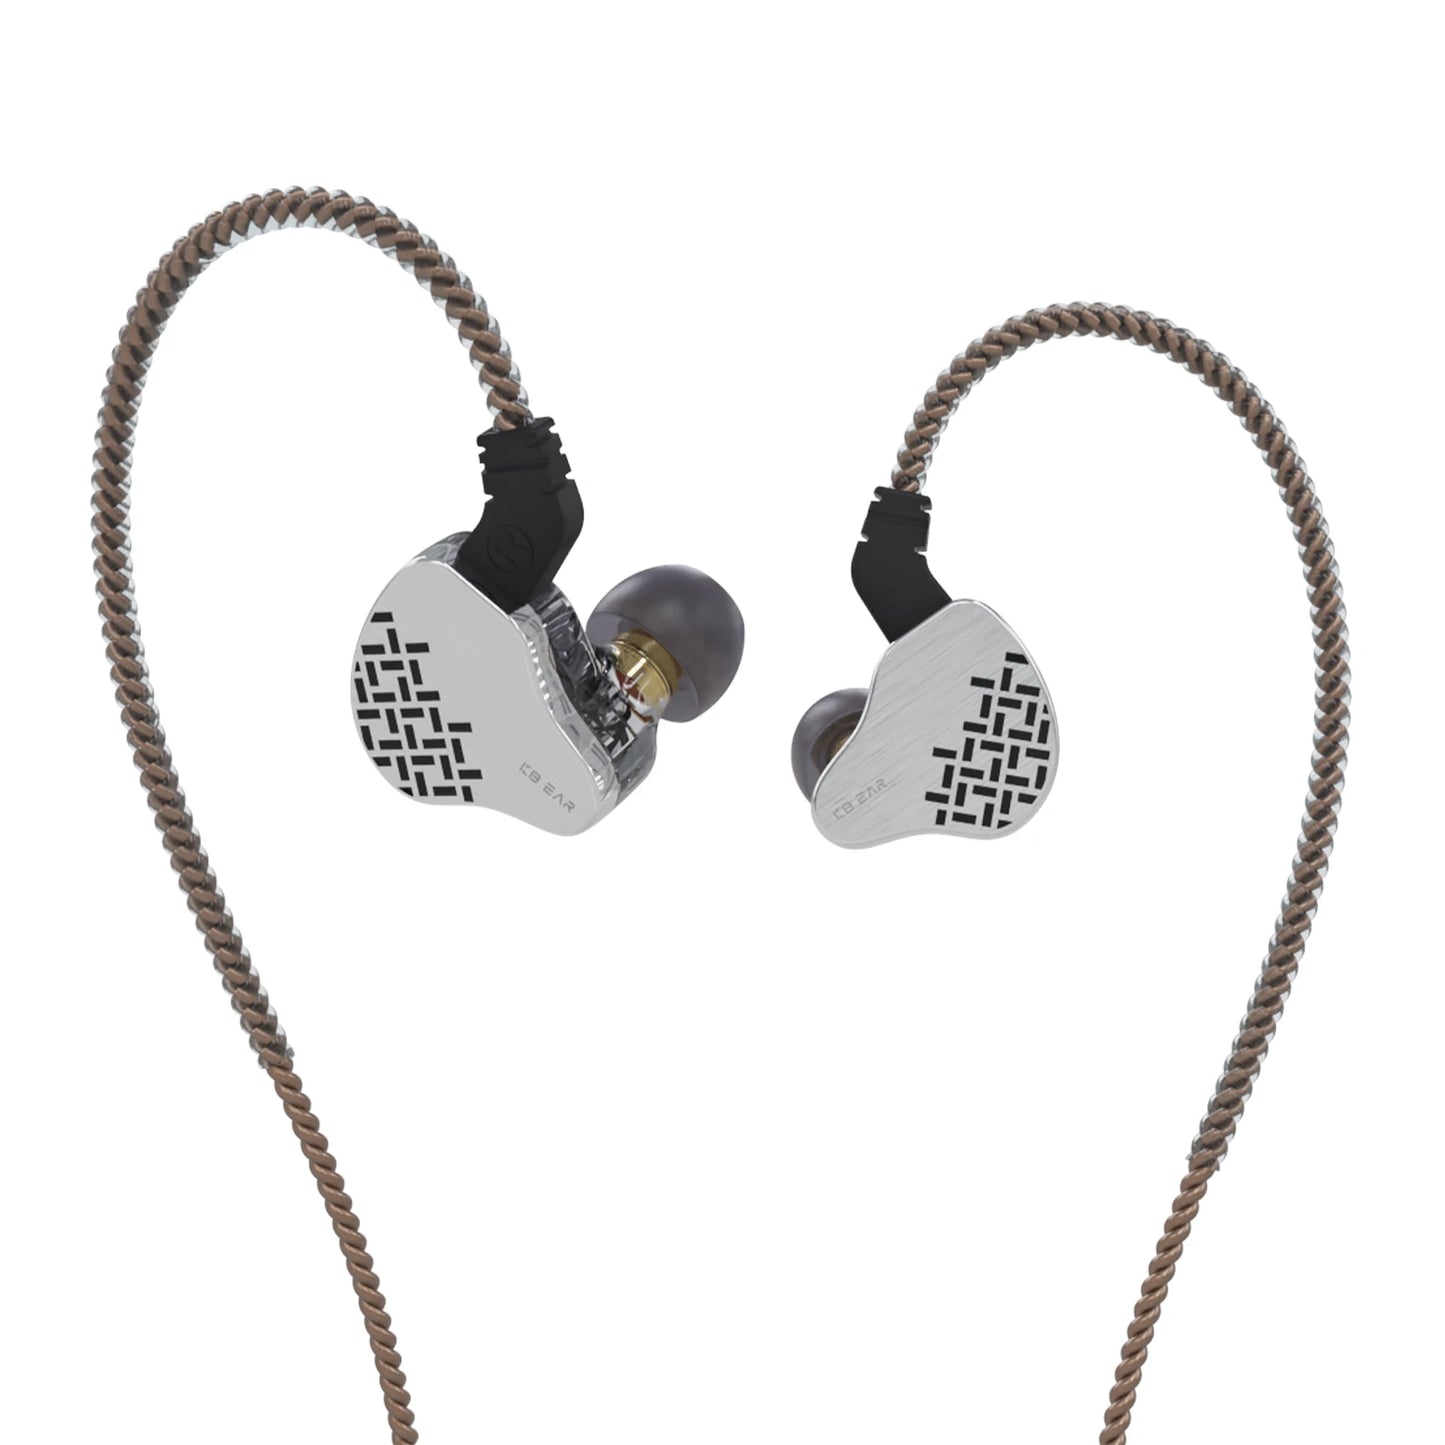 KBEAR Rosefinch Dynamic HiFi In-ear Headphone